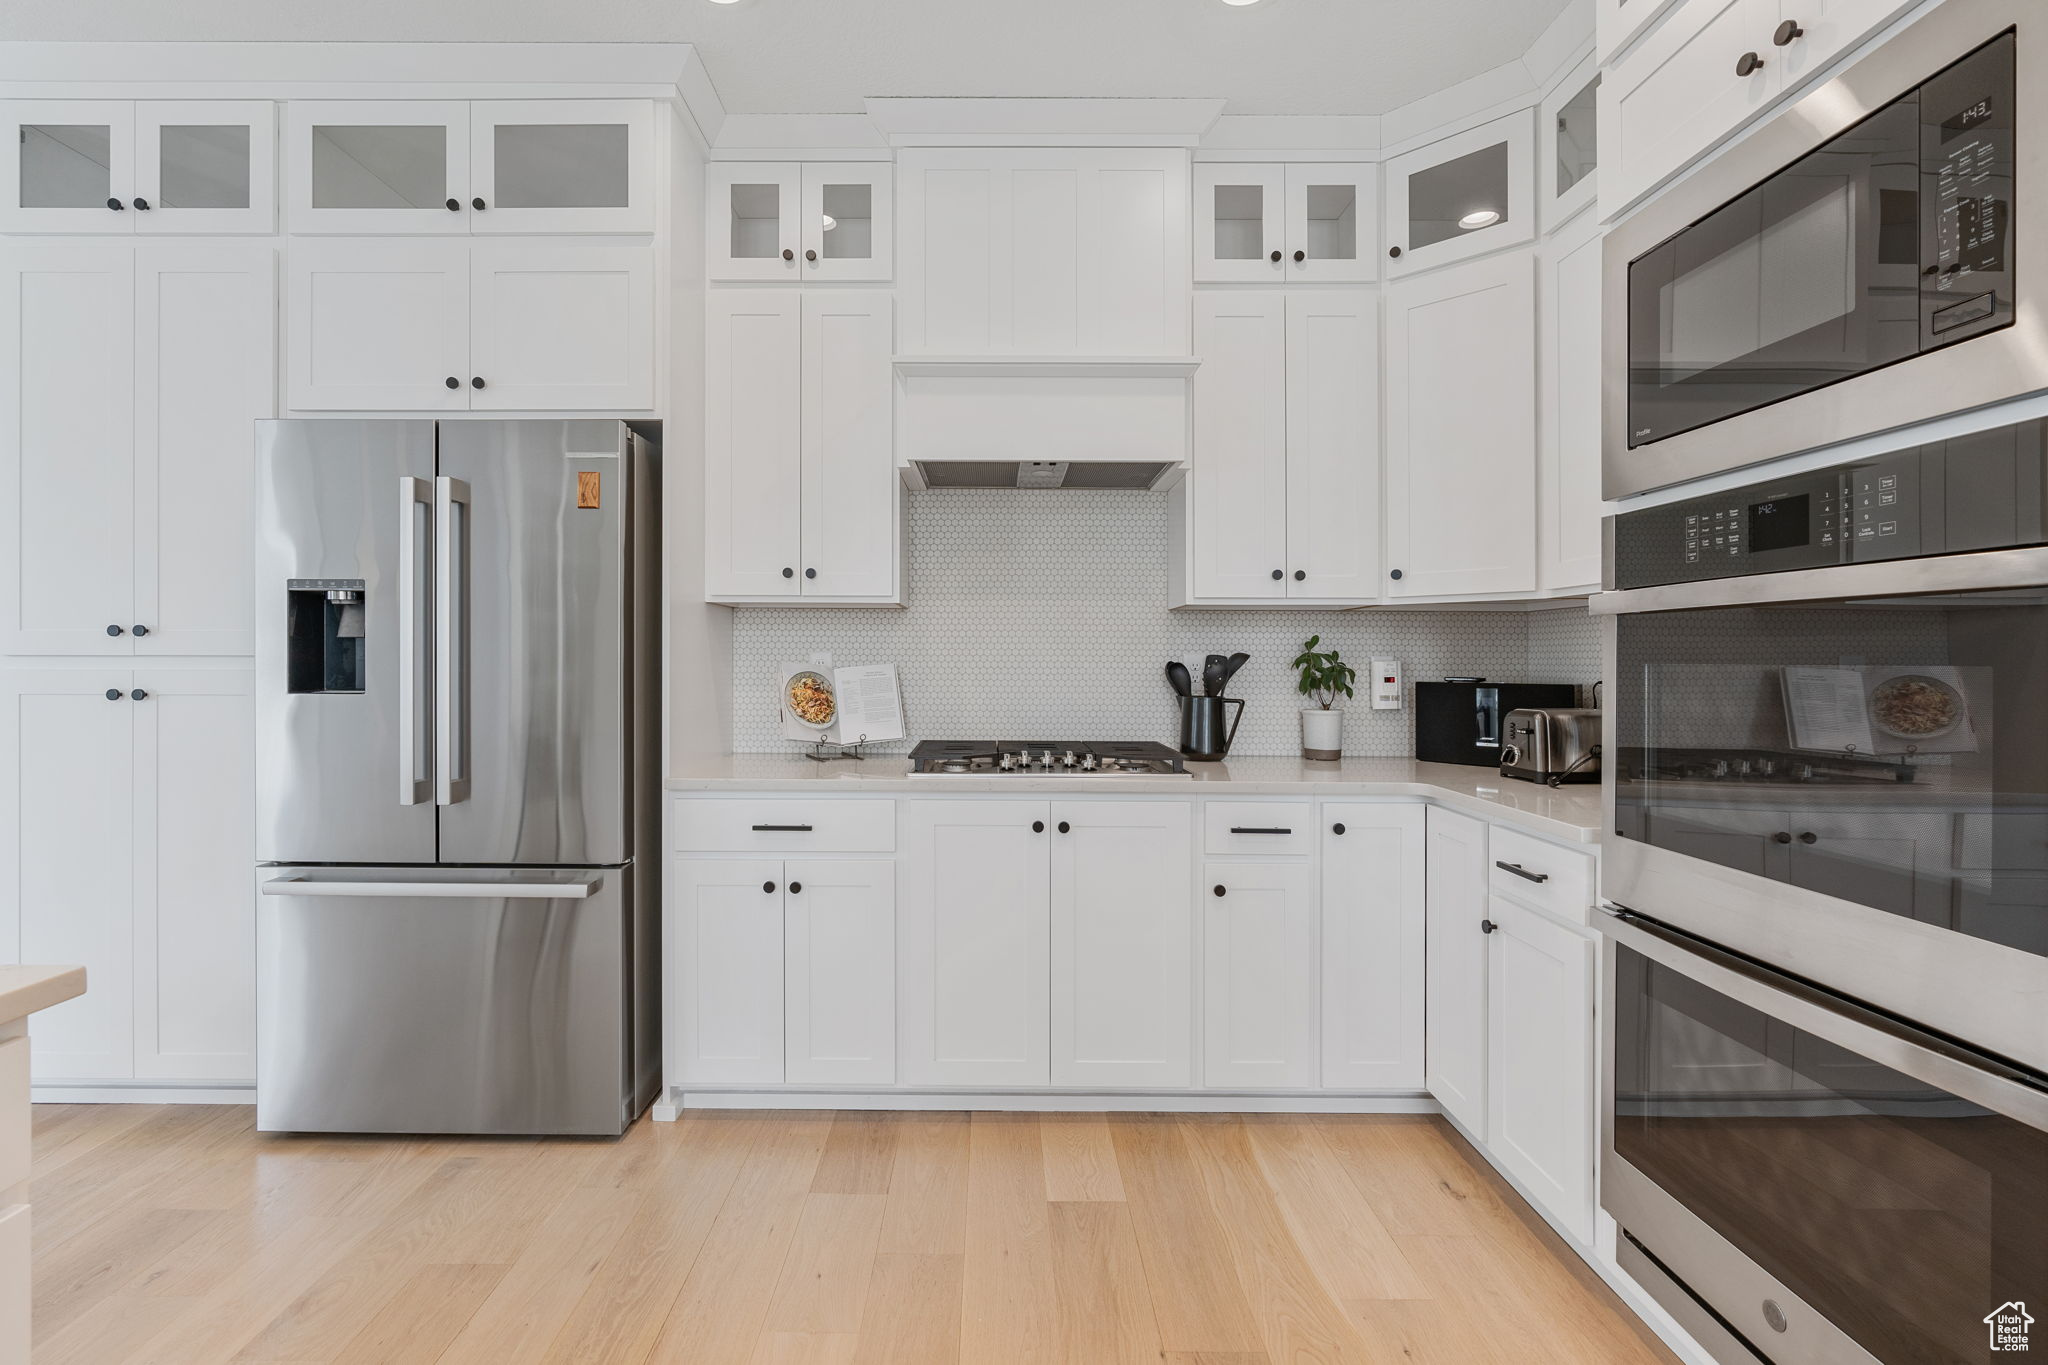 Kitchen featuring white cabinets, tasteful backsplash, white oak hardwood flooring, and stainless steel appliances.